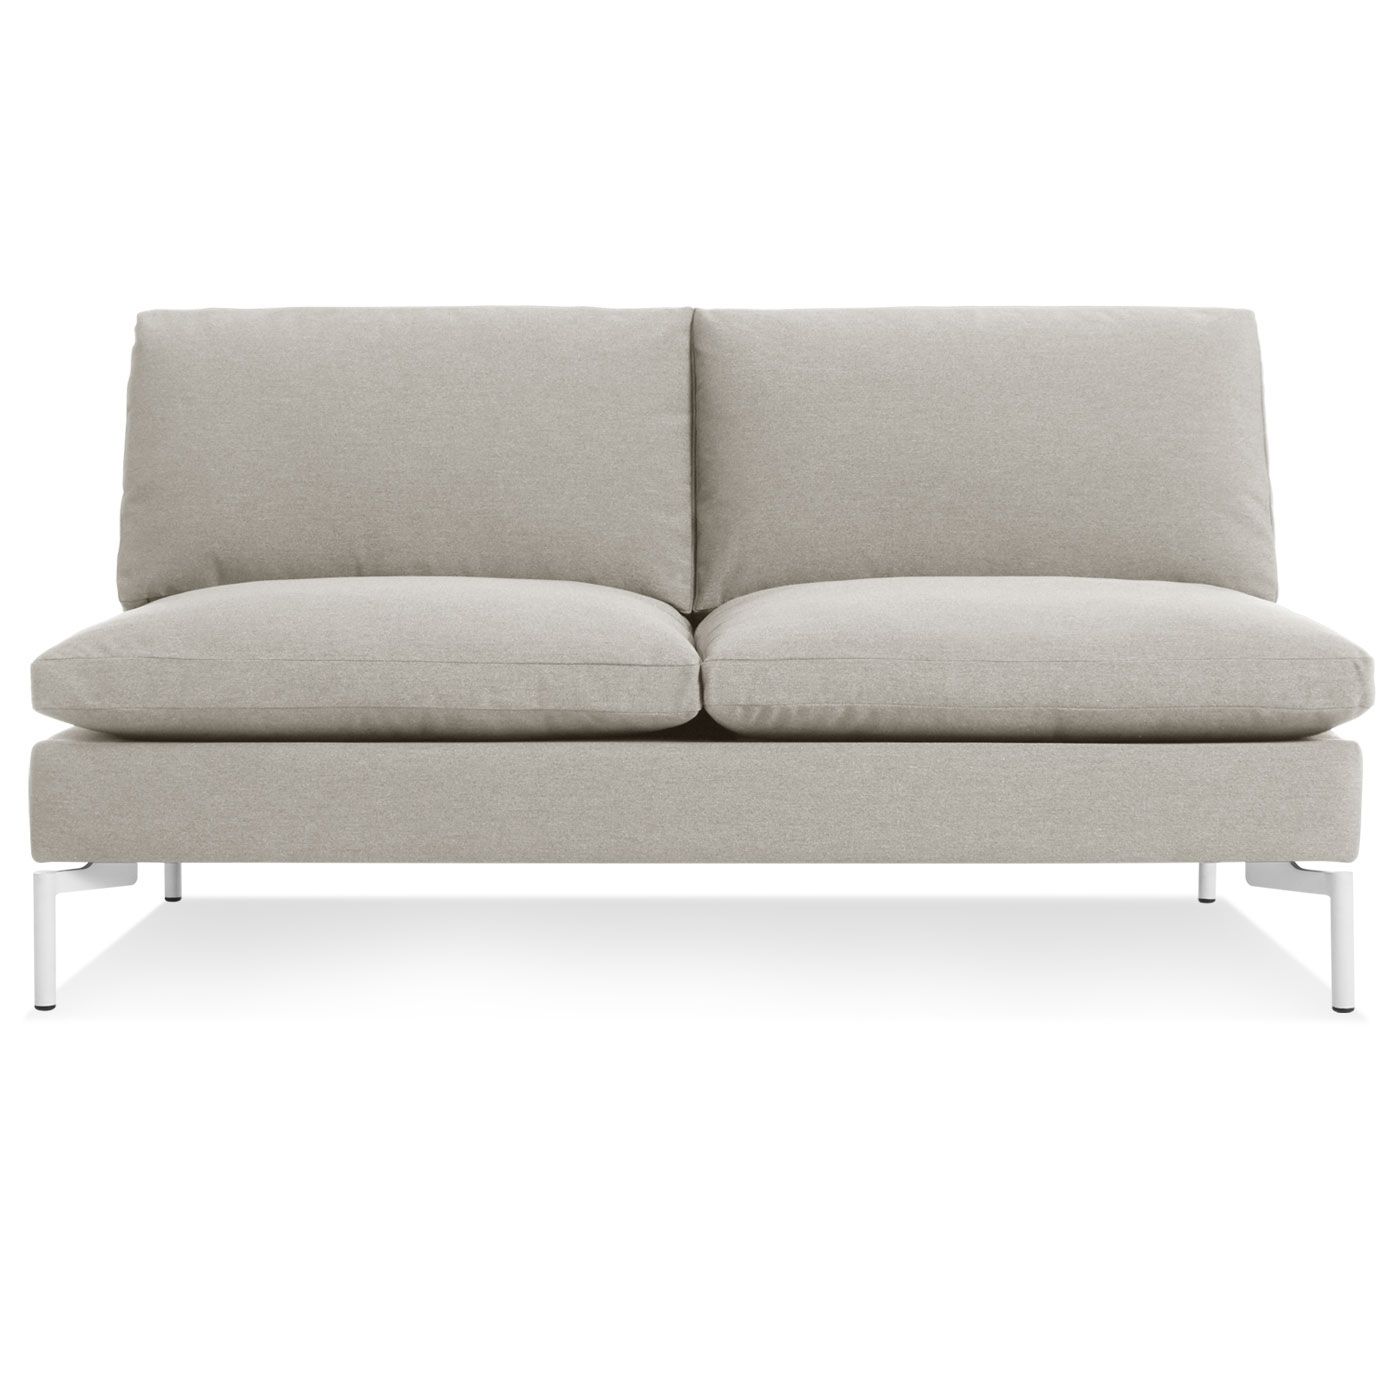 Armless Sofa Ikea – Armless Sofa As Perfect Sofa For Small Family With Small Armless Sofas (Photo 1 of 10)